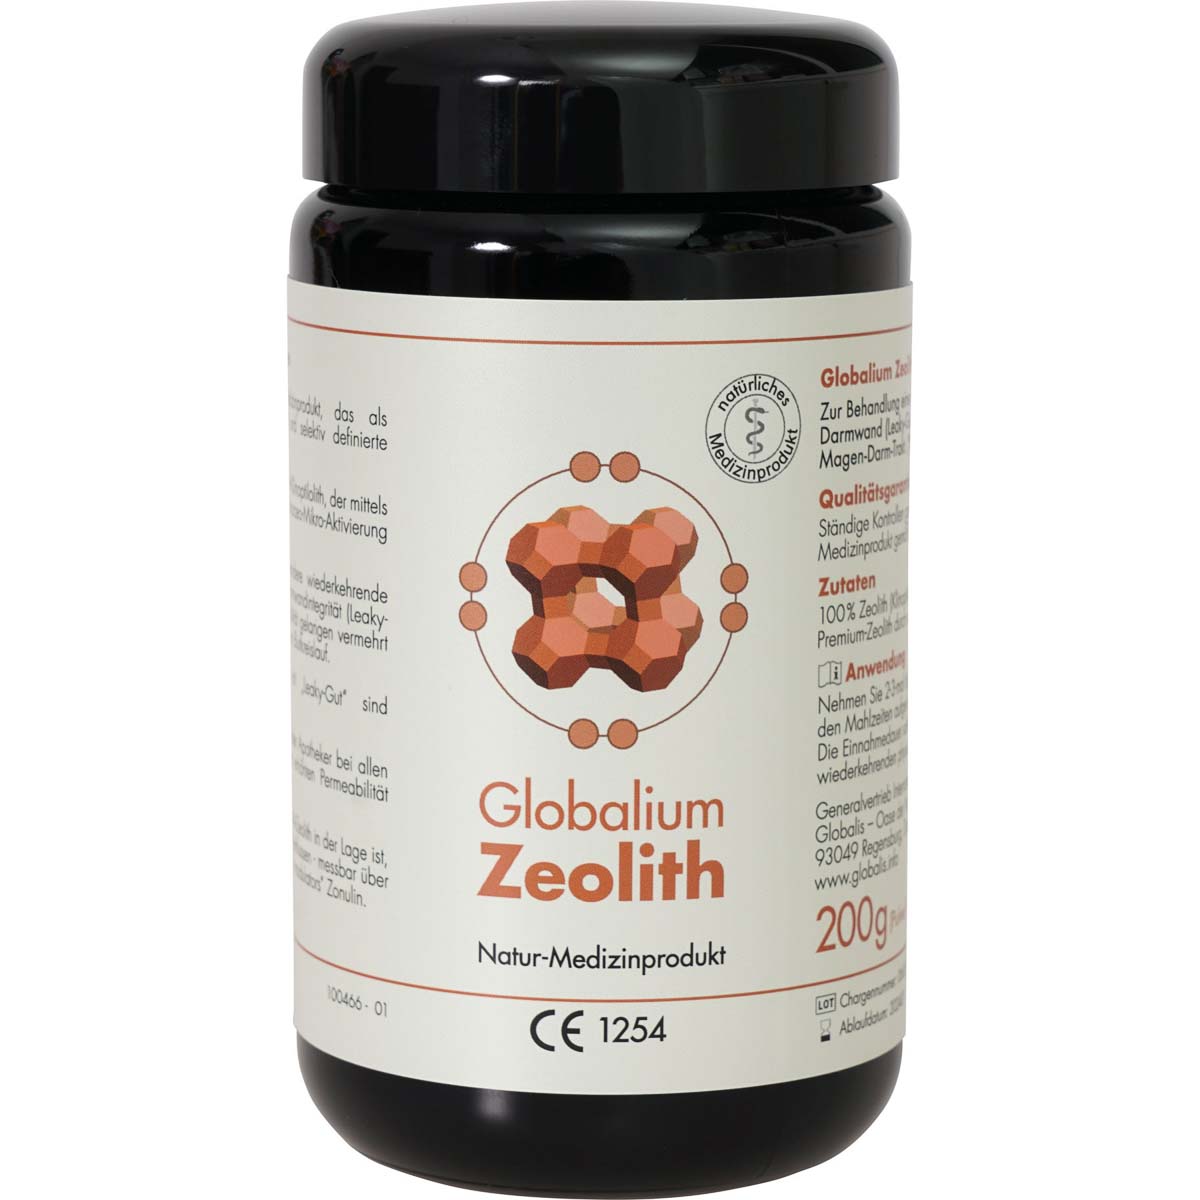 Globalium Zeolithpulver Medizinprodukt